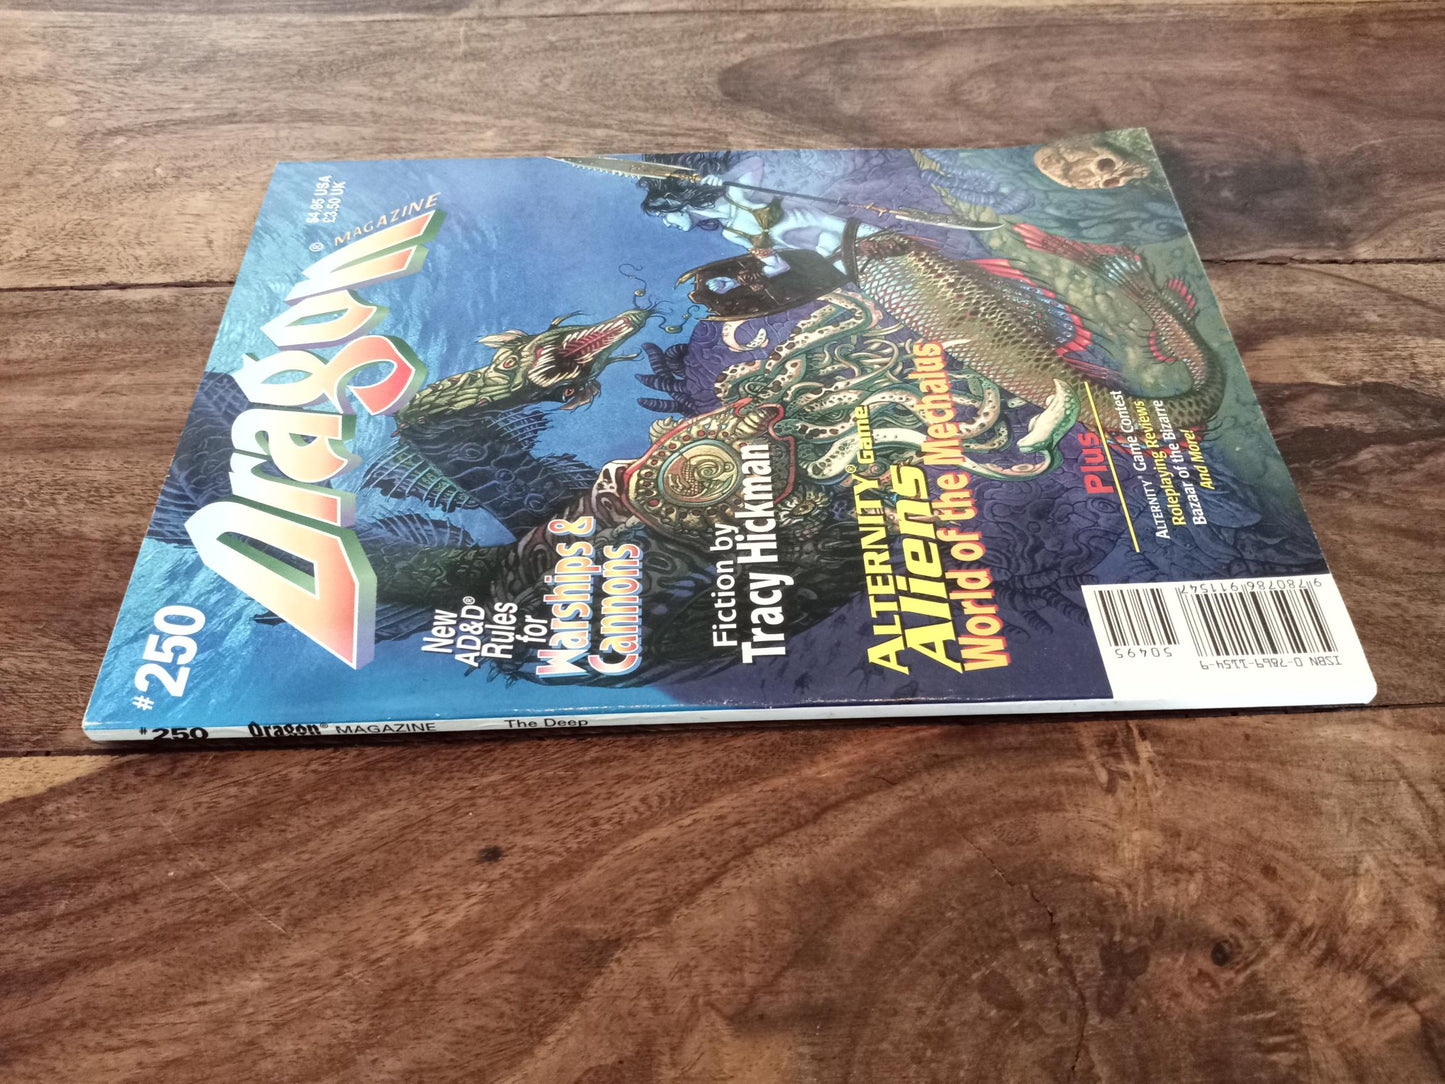 Dragon Magazine #250 August 1998 TSR D&D